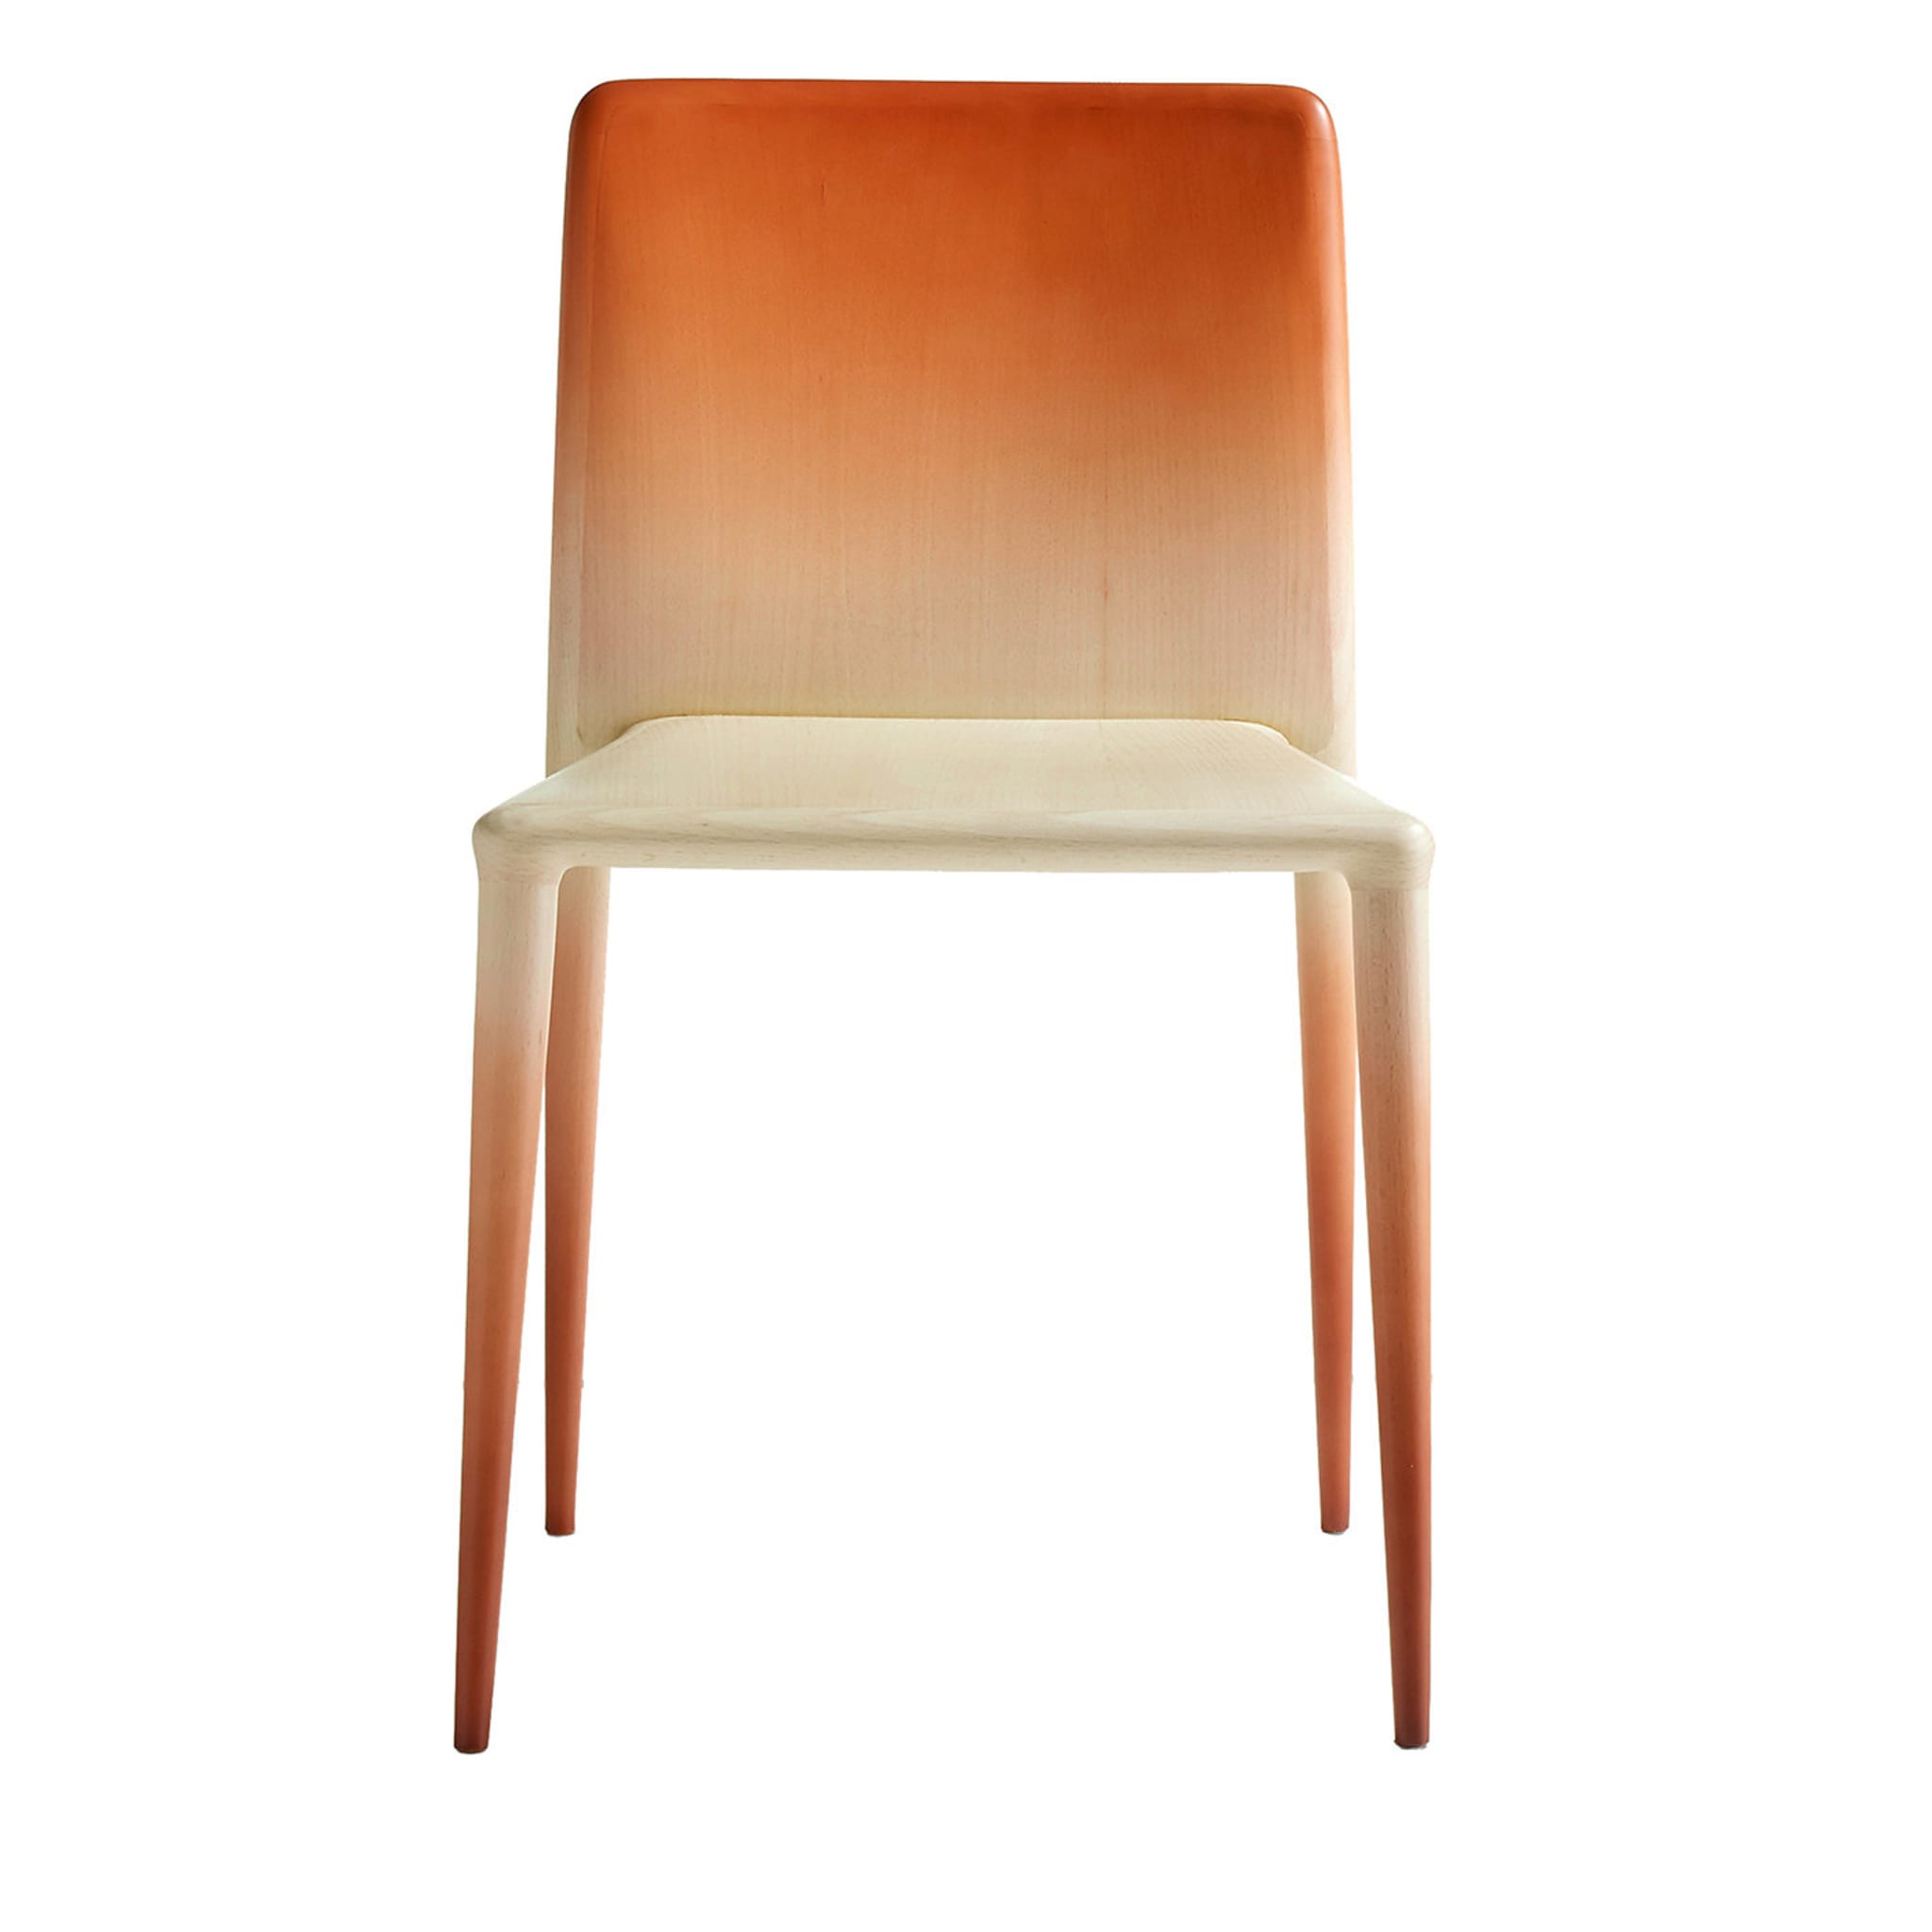 Miss Wood Orange Chair - Main view